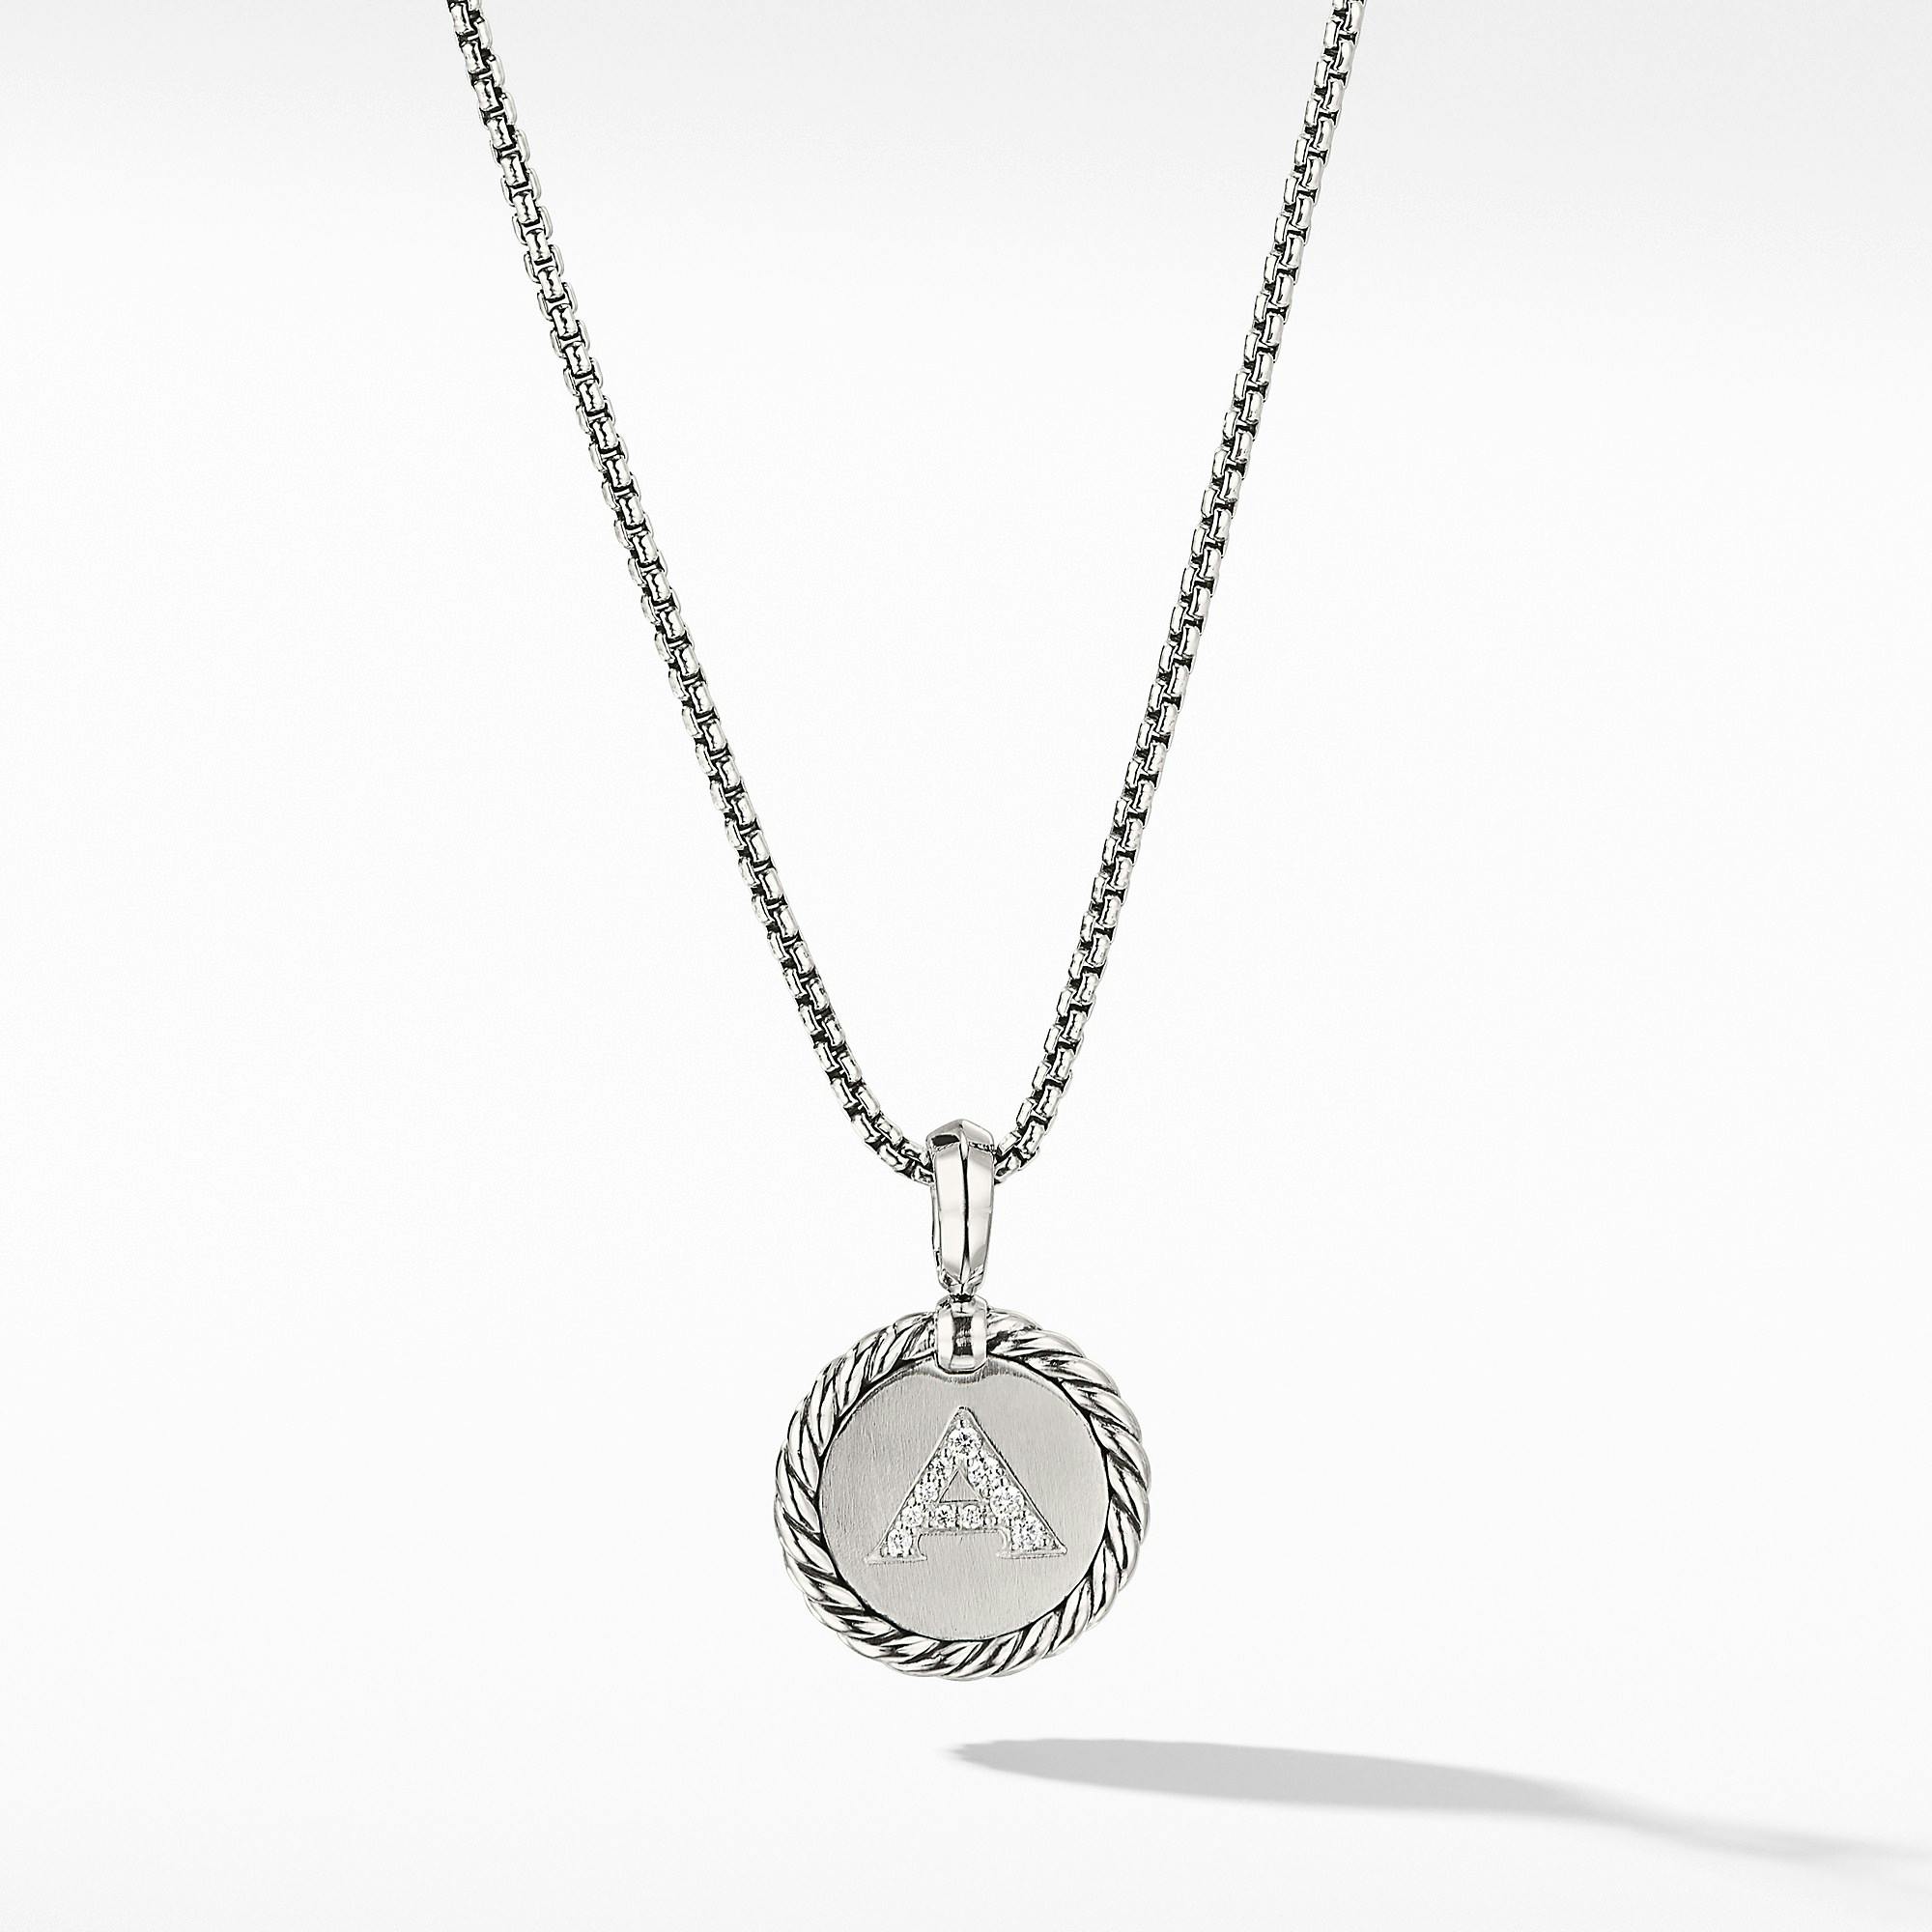 David Yurman "A" Initial Charm Necklace with Diamonds